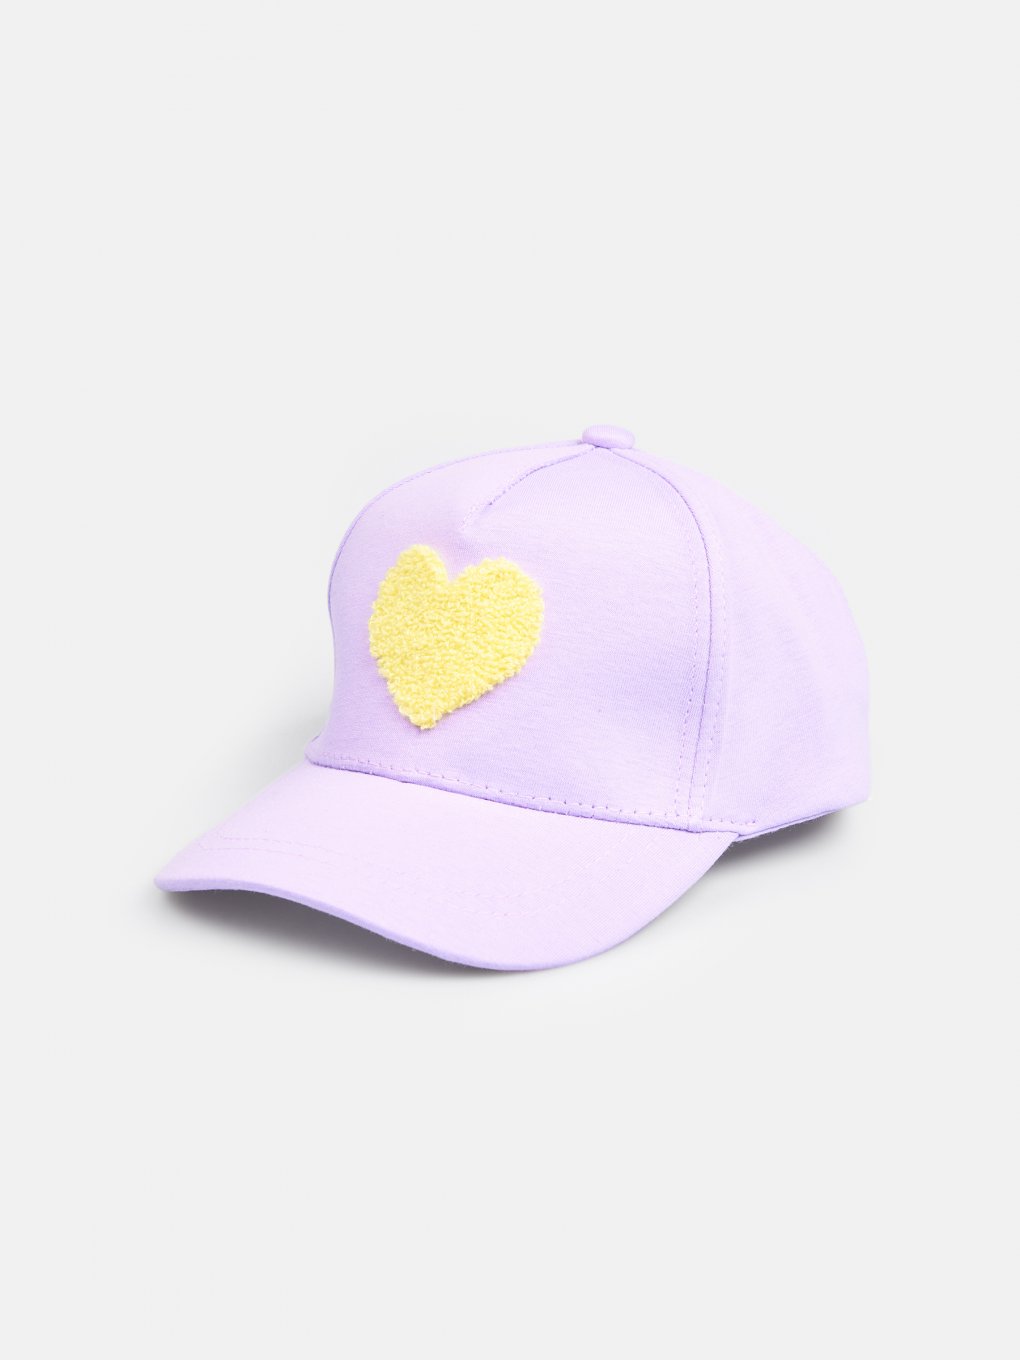 Baseball cap with heart